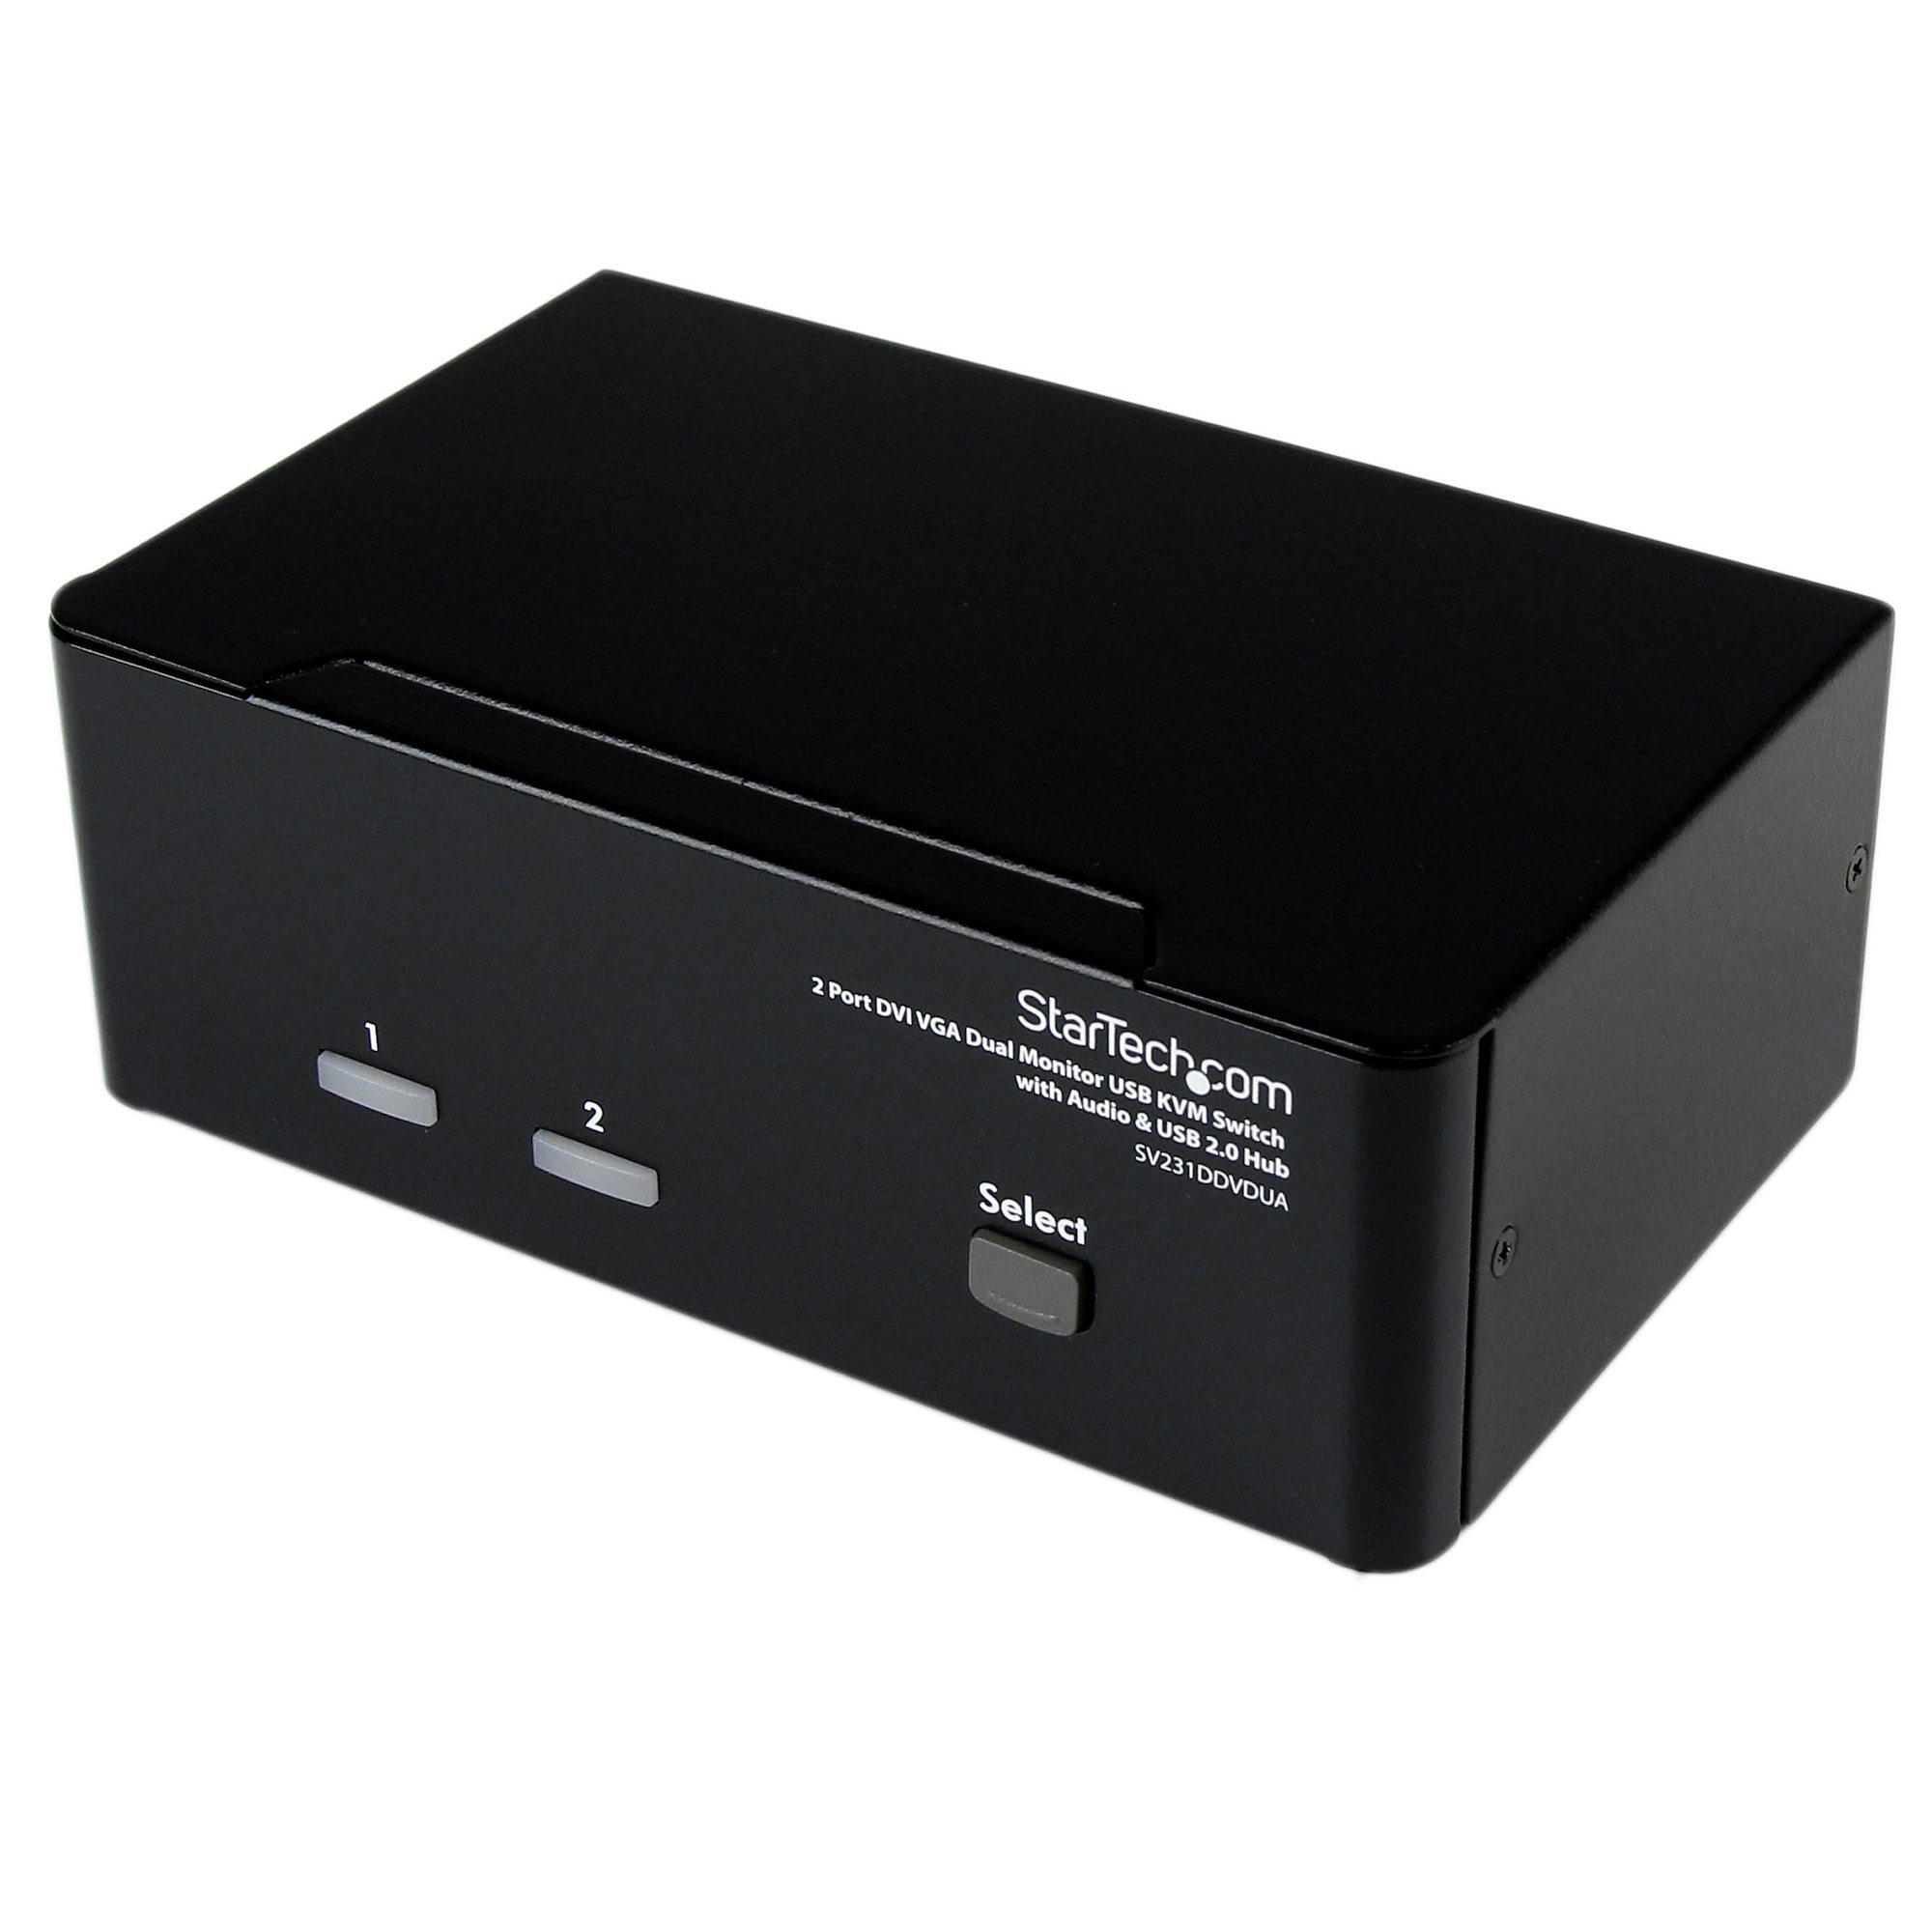 VGA-Switch-Box für PC-TV-Monitor D DOLITY 2-Port-Buchse Auflösung bis zu 1920x1440 2 VGA-Eingang / 1 VGA-Ausgang 